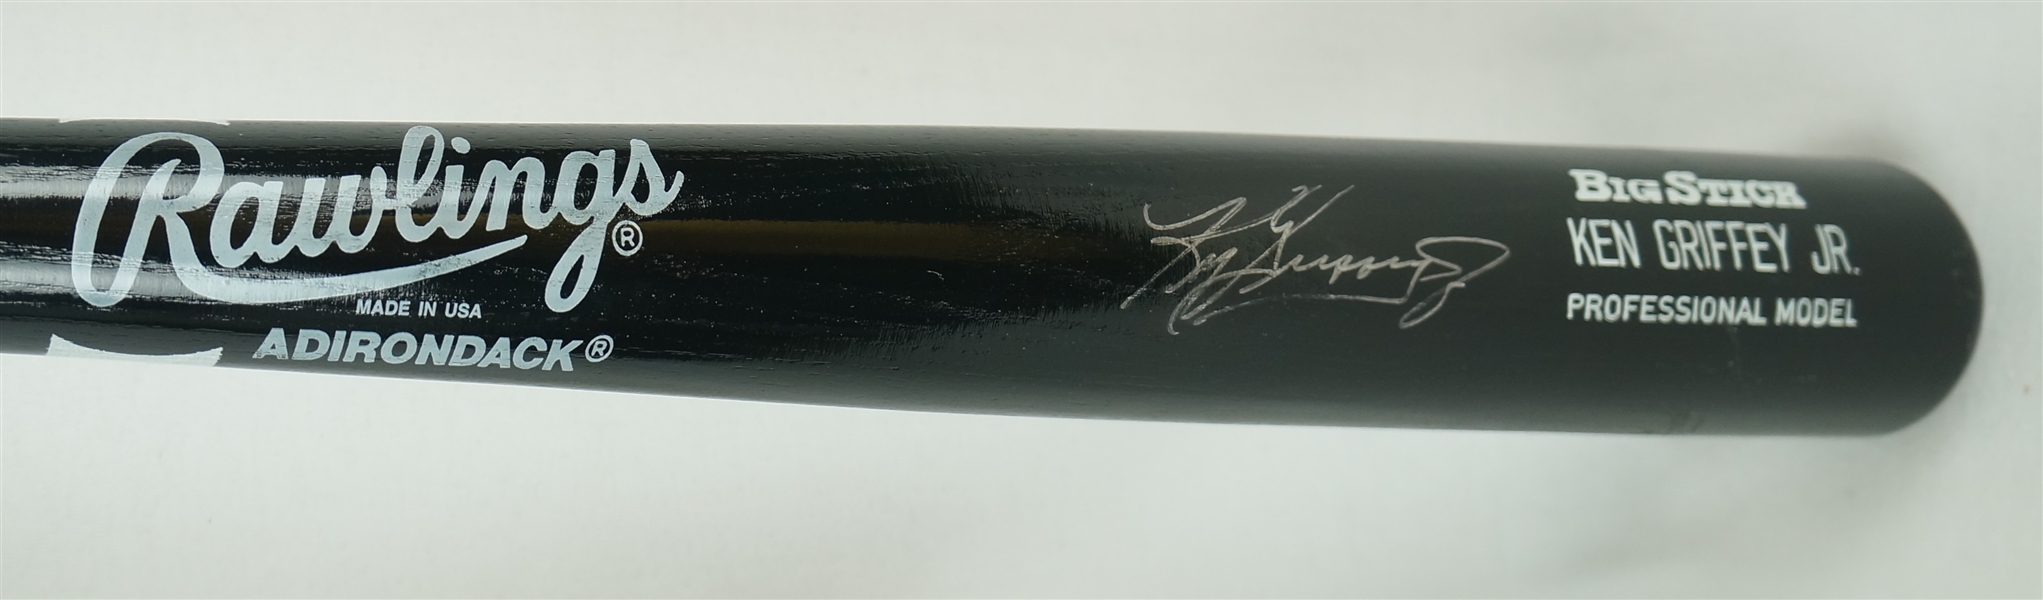 Ken Griffey Jr. Autographed Baseball Bat